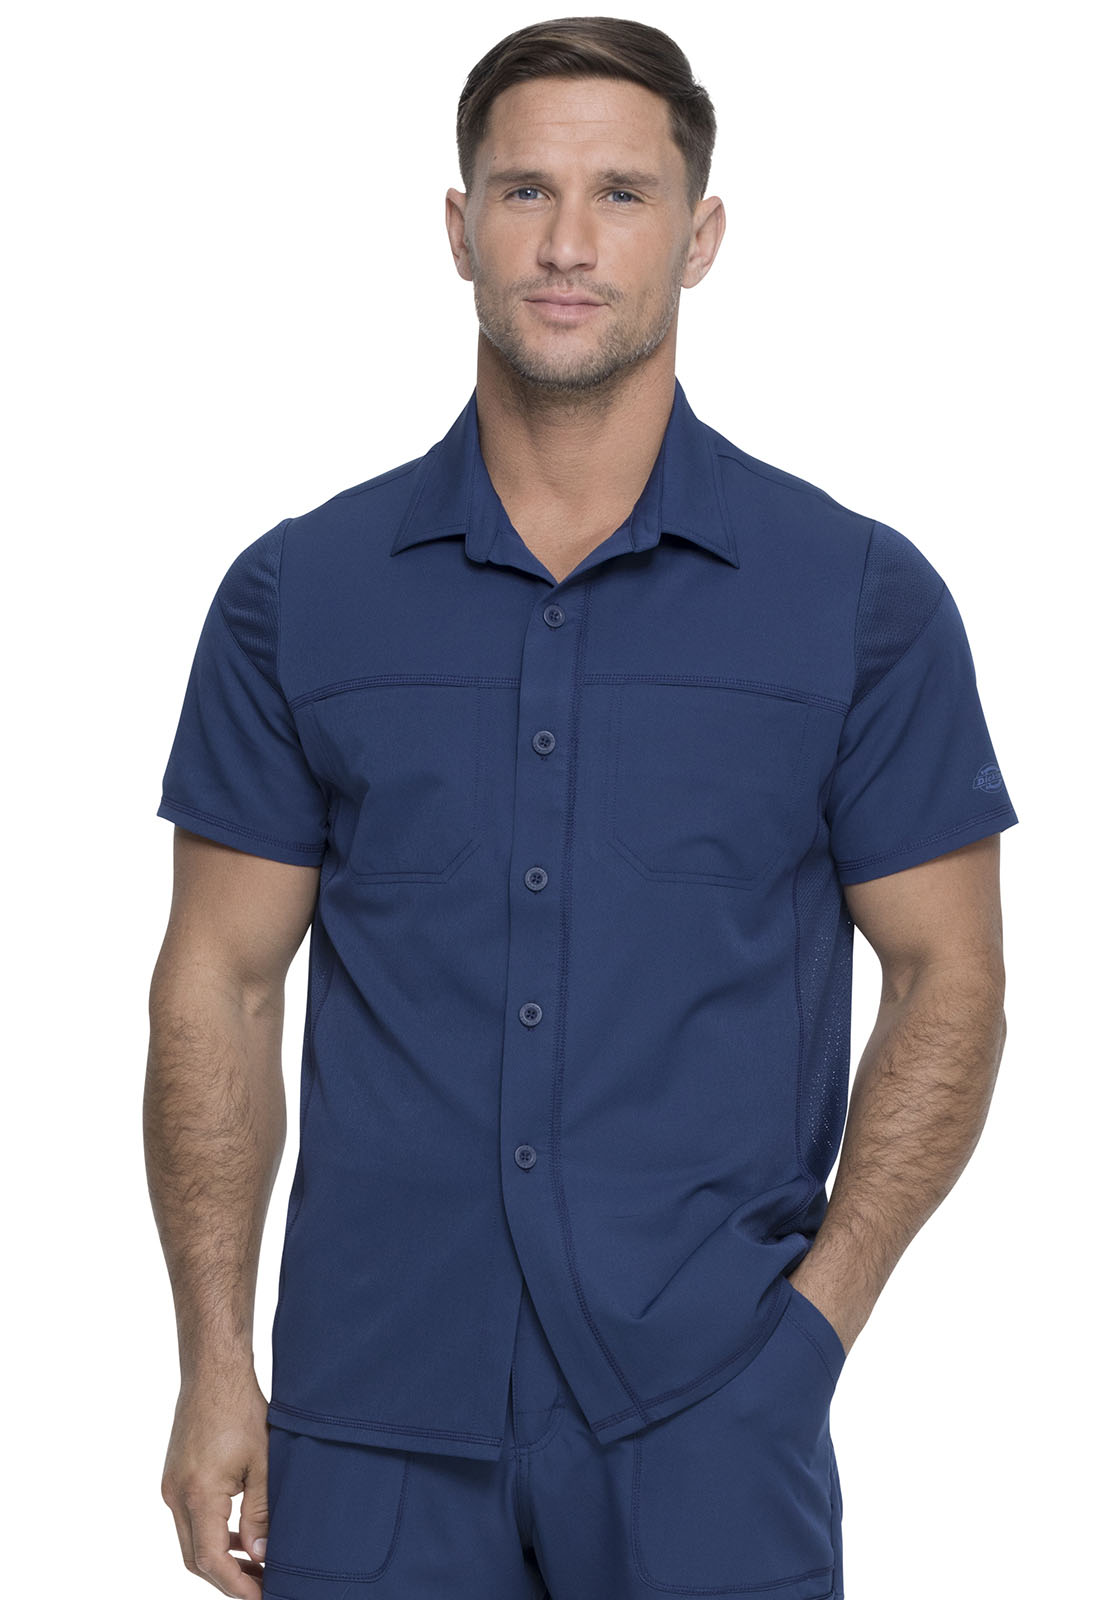 navy collared shirt